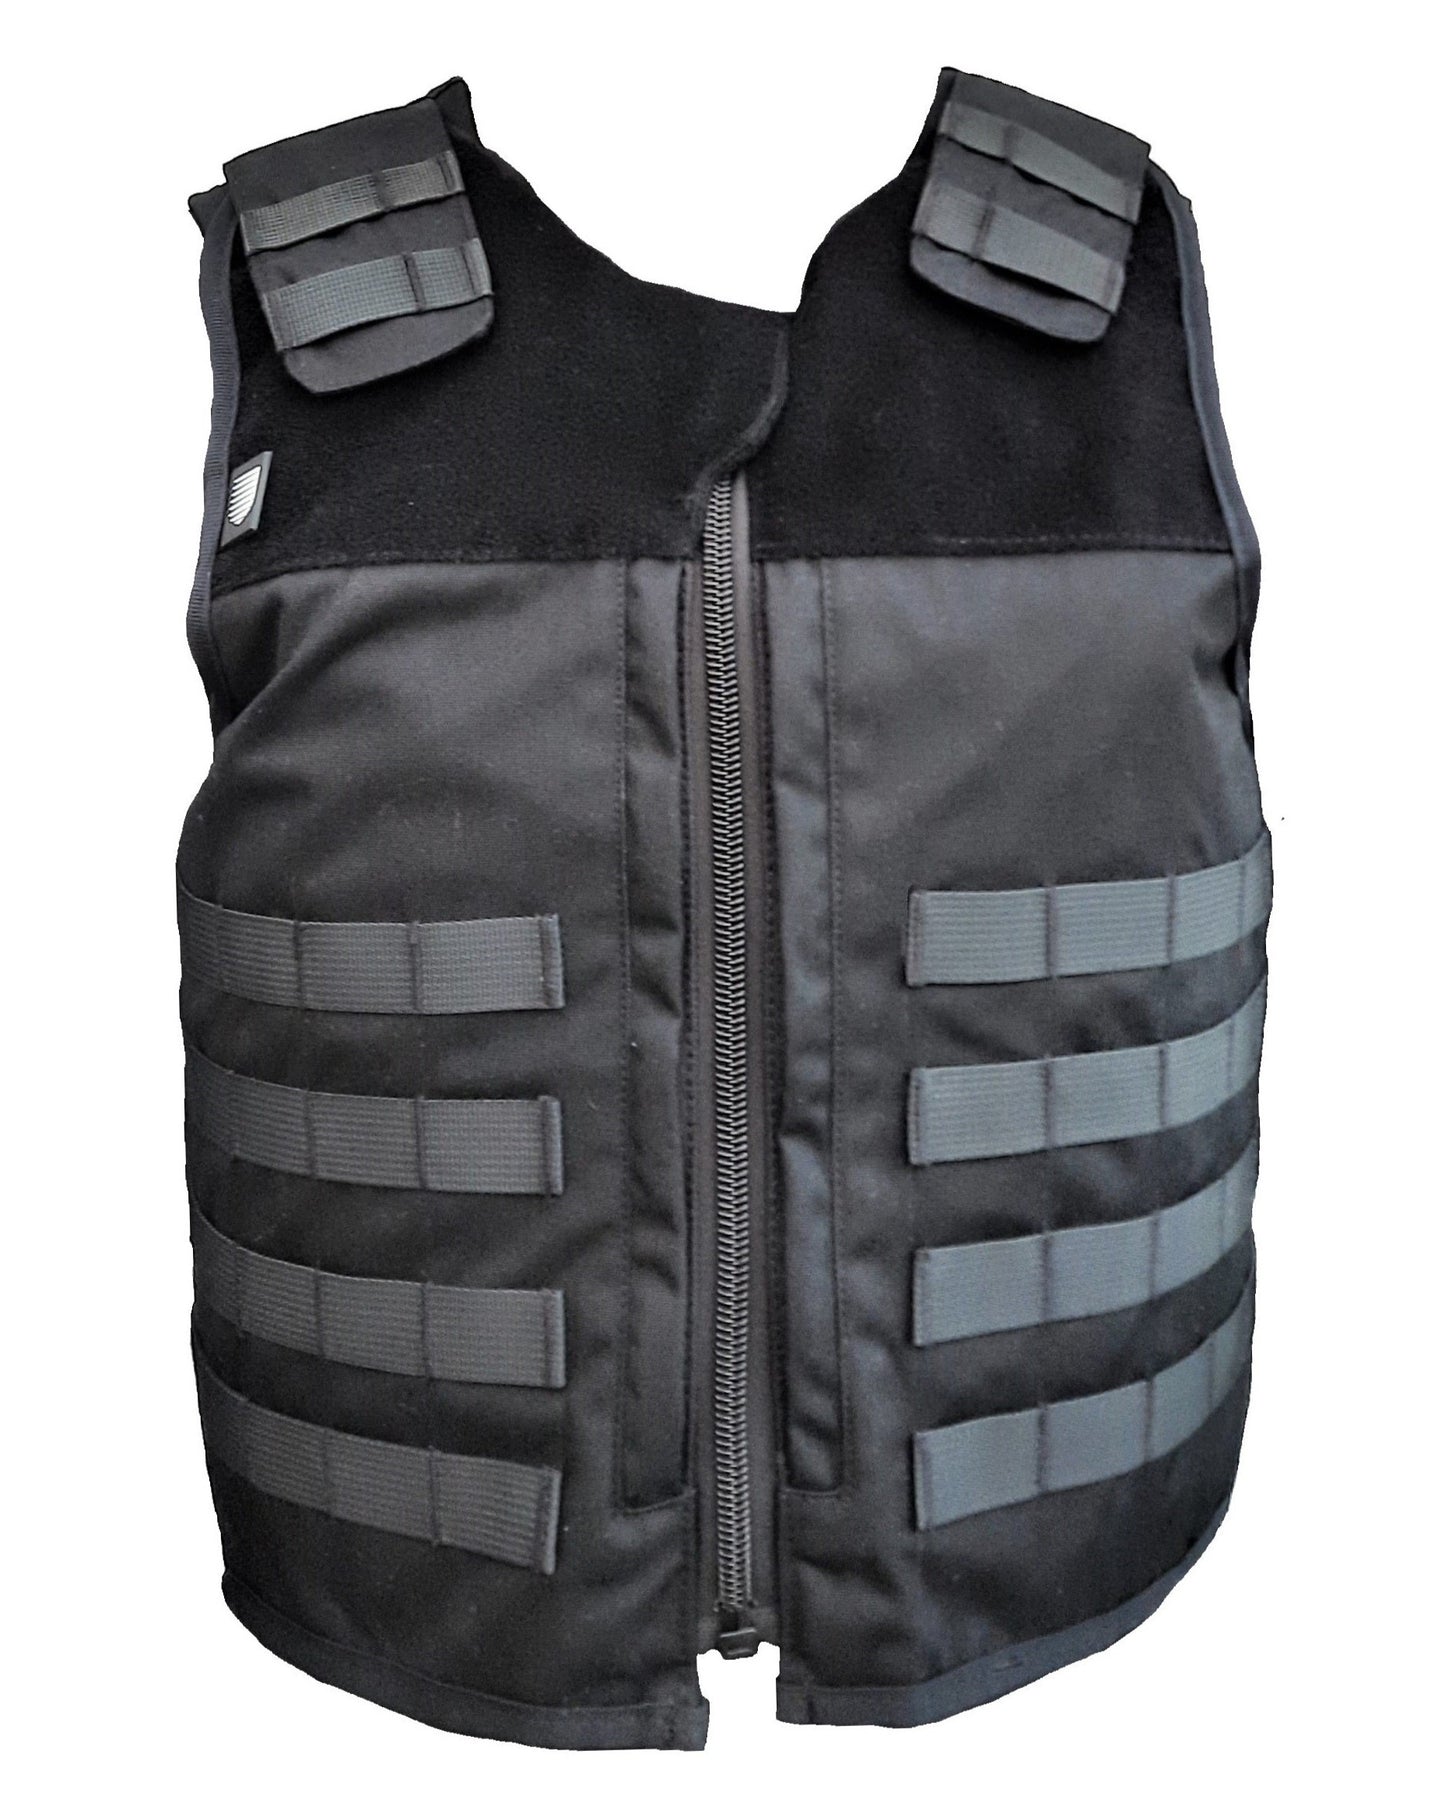 <tc>Heracles Molle bulletproof vest H01-KR1 black for sale Europe</tc>